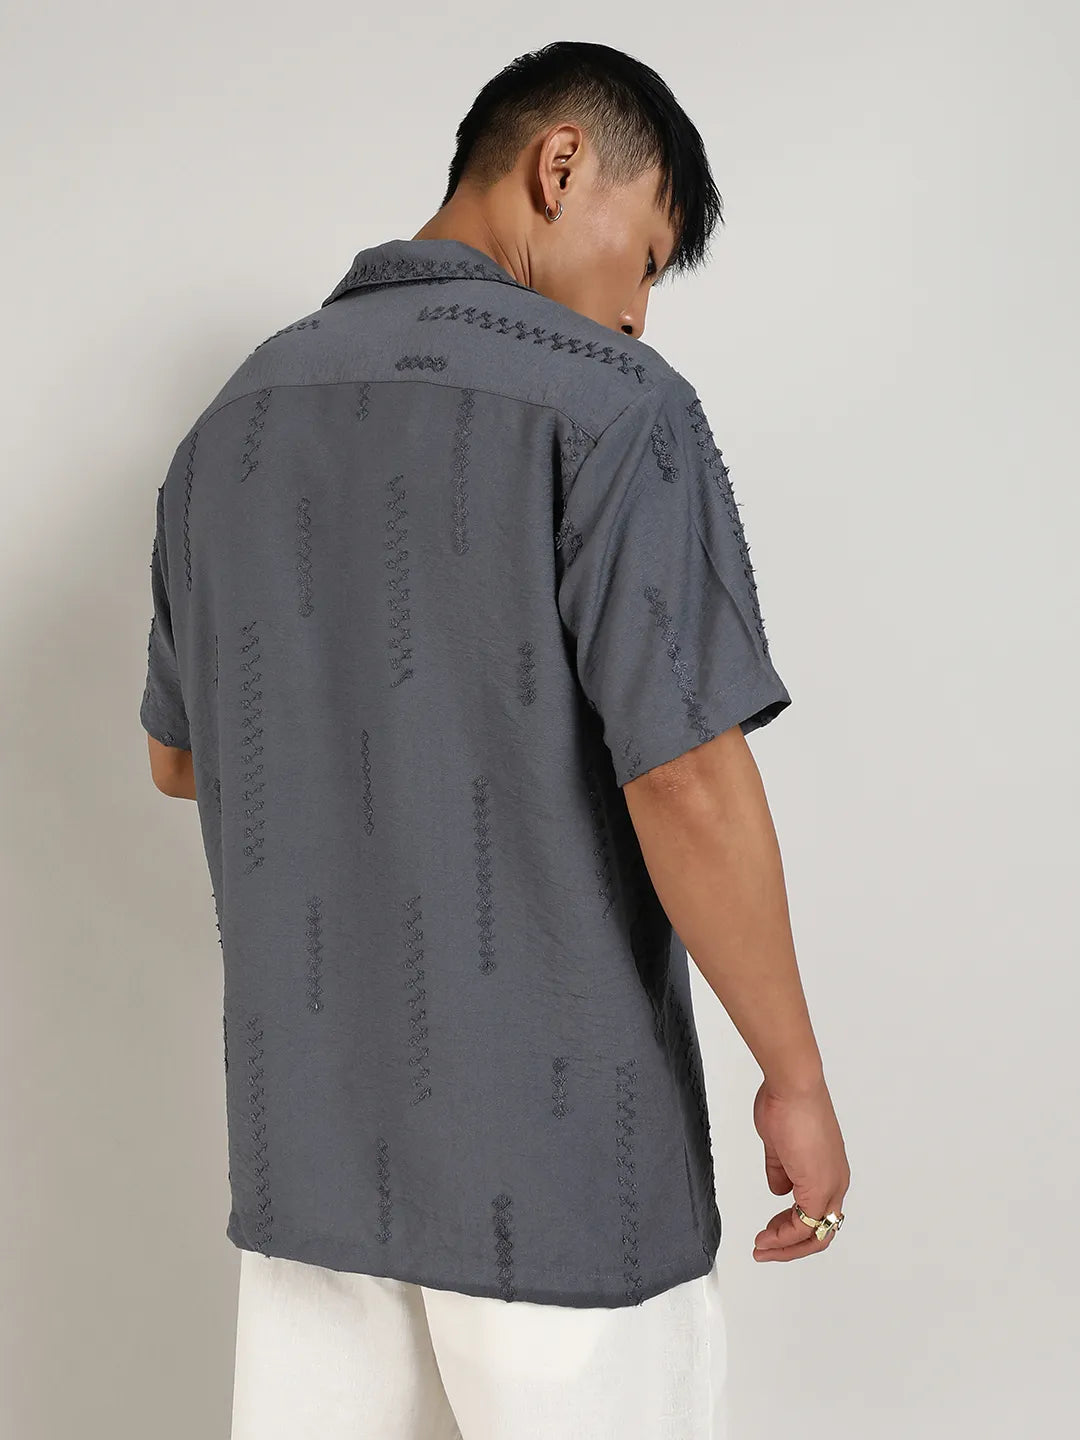 Embroidered Twist Shirt